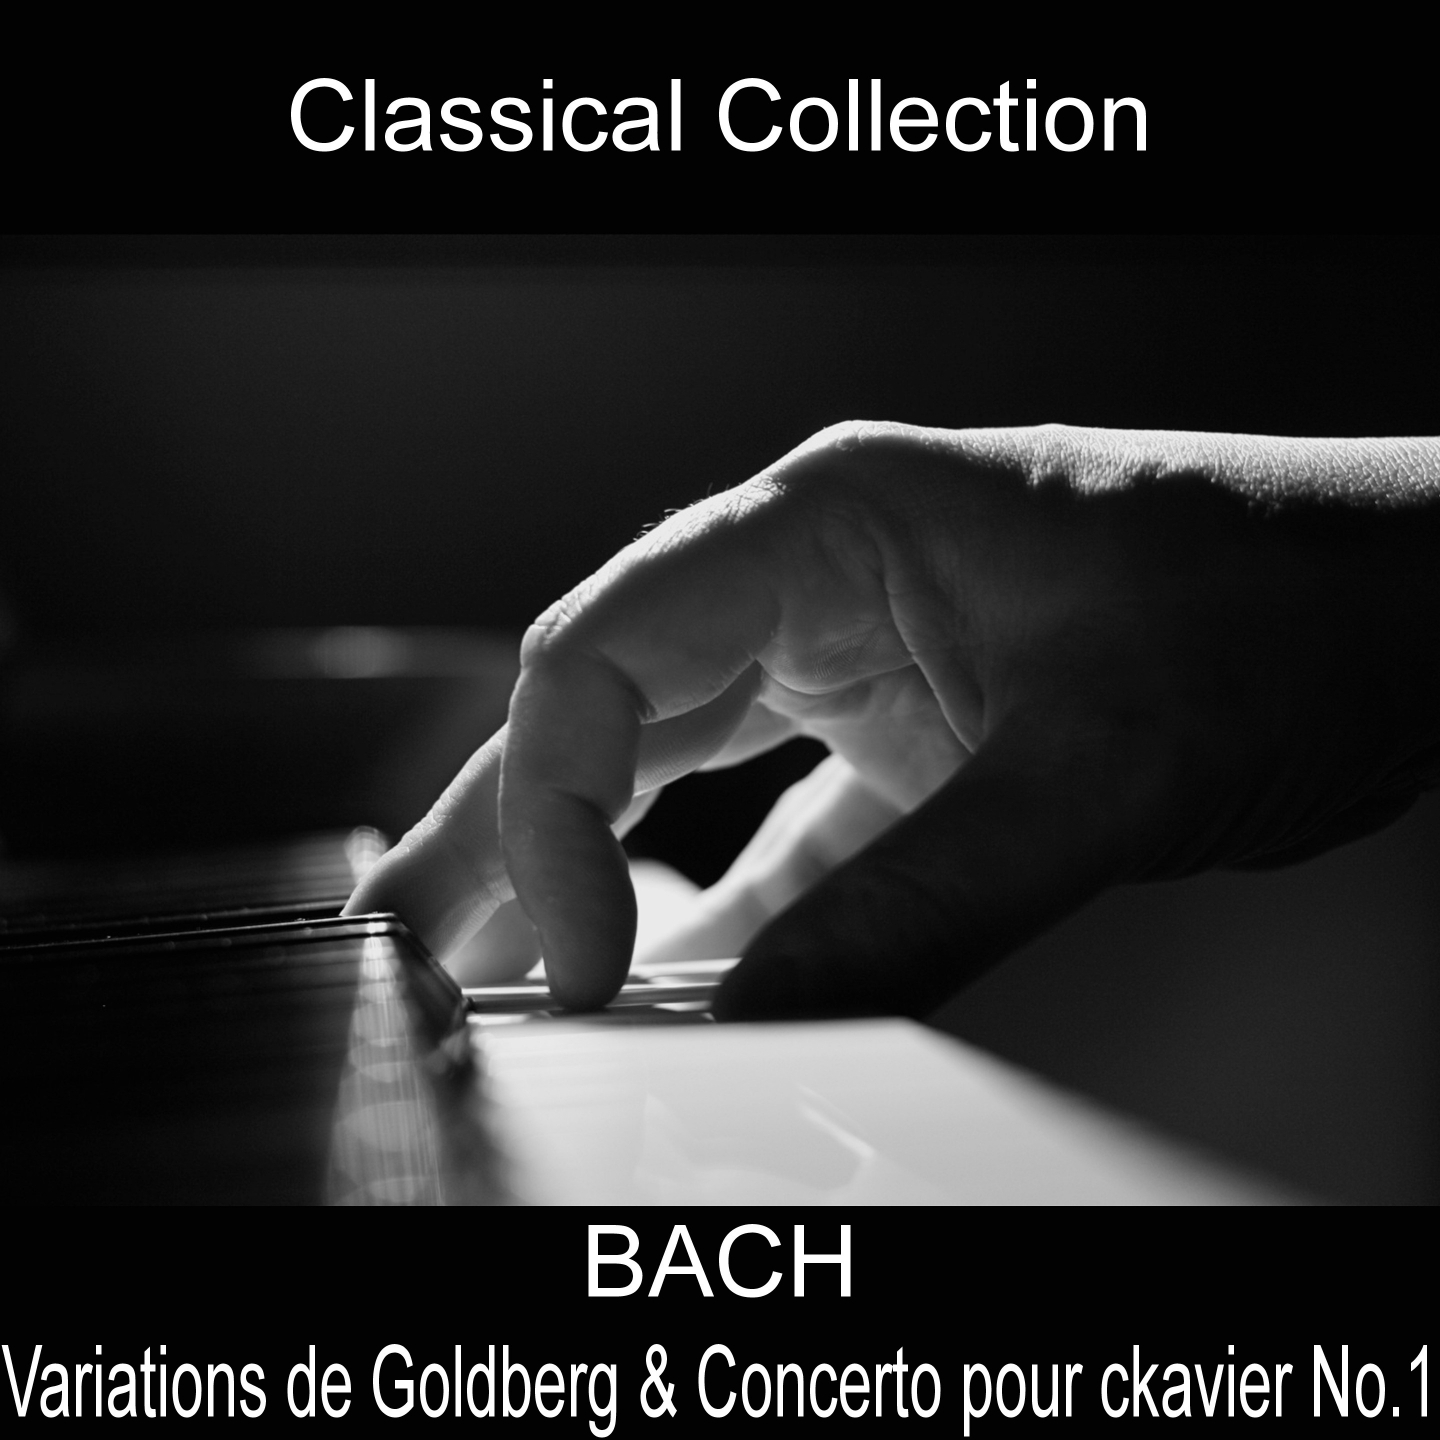 Variations Goldberg, BWV 988: No. 25, Variation XXIV Canone all' Ottava a un clavier